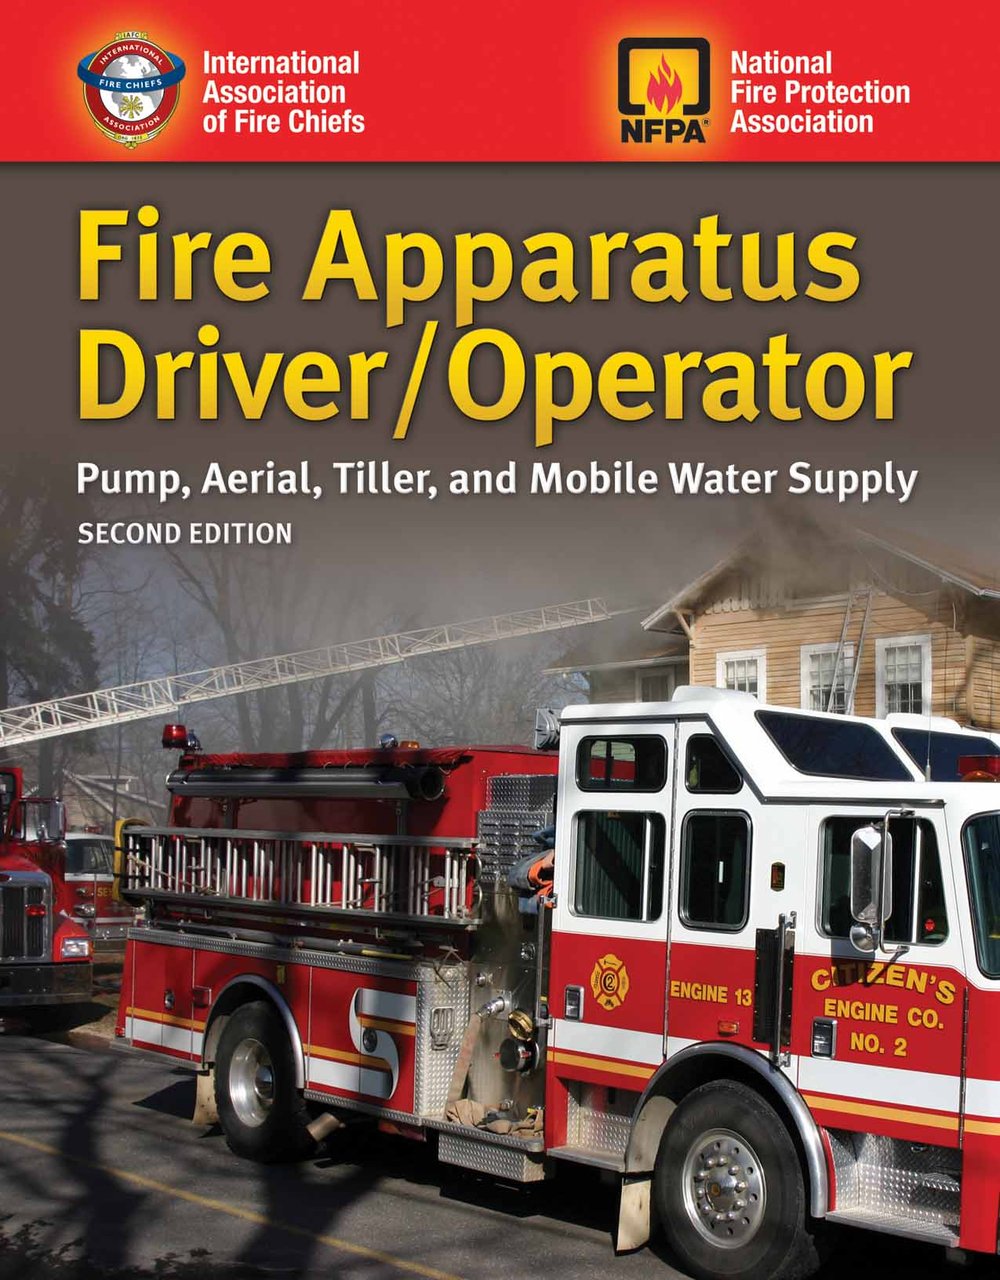 Fire Apparatus Driver/Operator, Second Edition